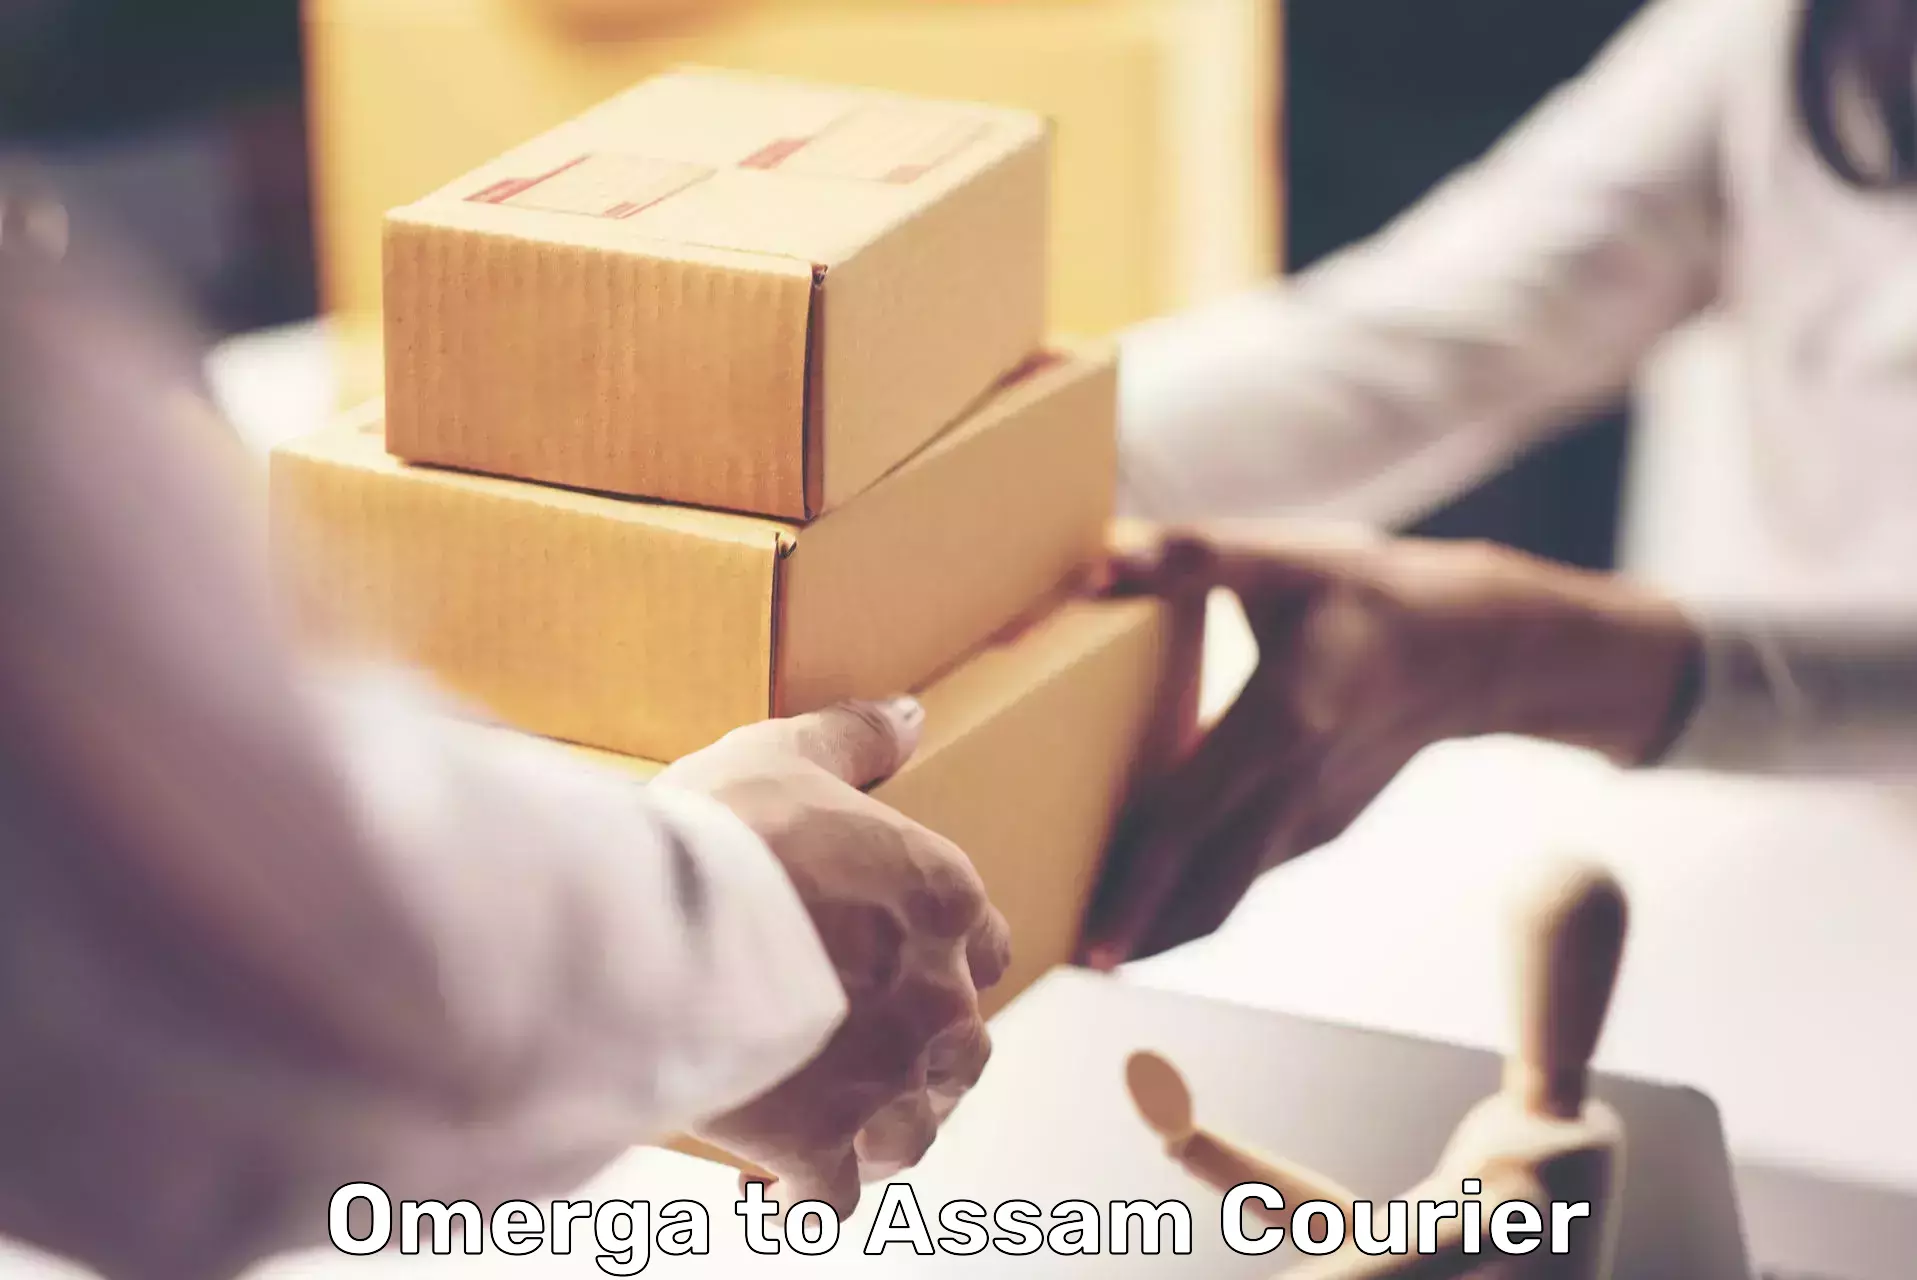 Professional courier handling Omerga to Assam